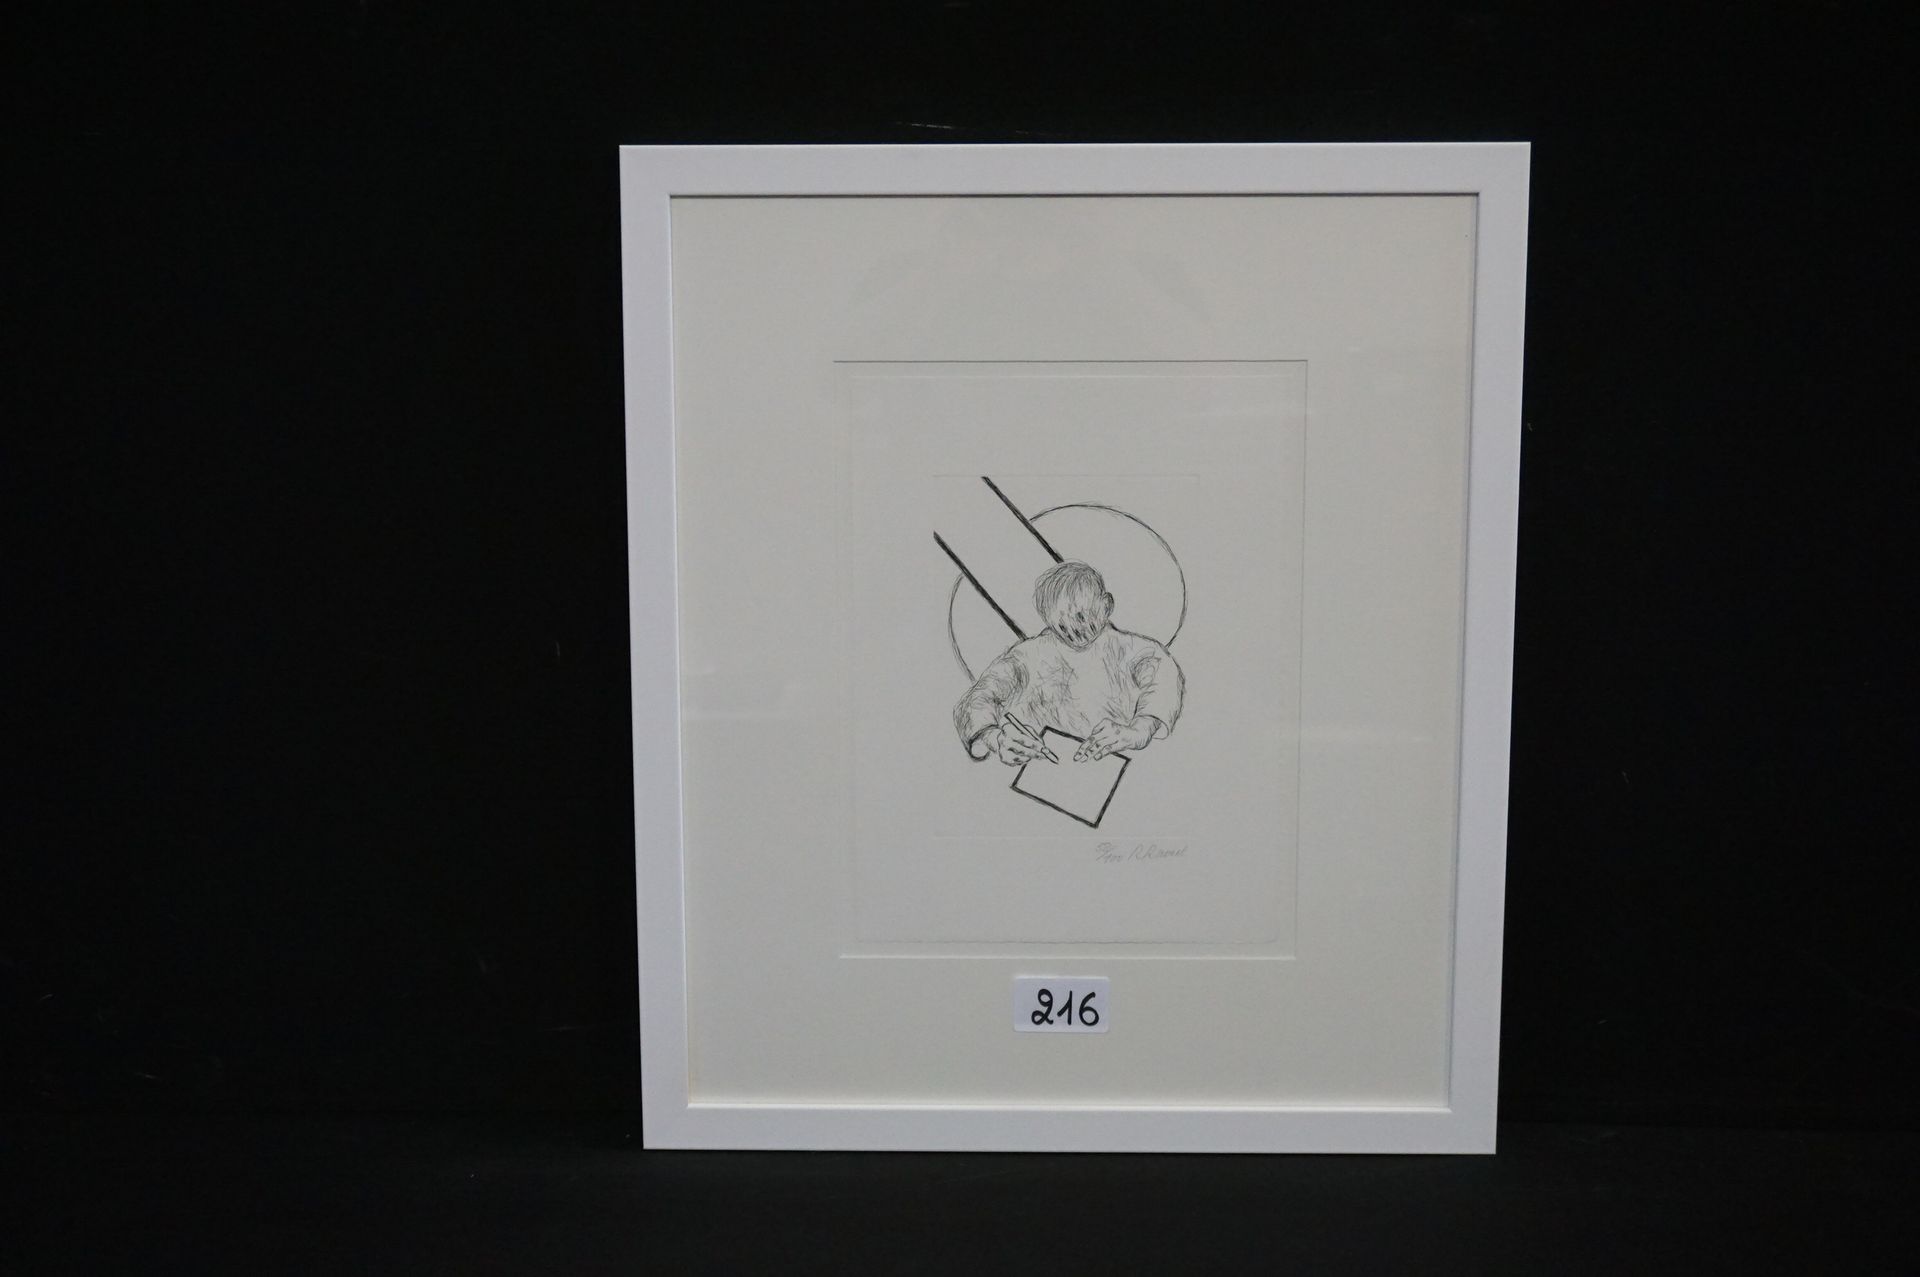 ROGER RAVEEL (1921 - 2013) "飞机对面" - 蚀刻版画 - 2007年期间 - 编号58/100 - 24 x 17 cm